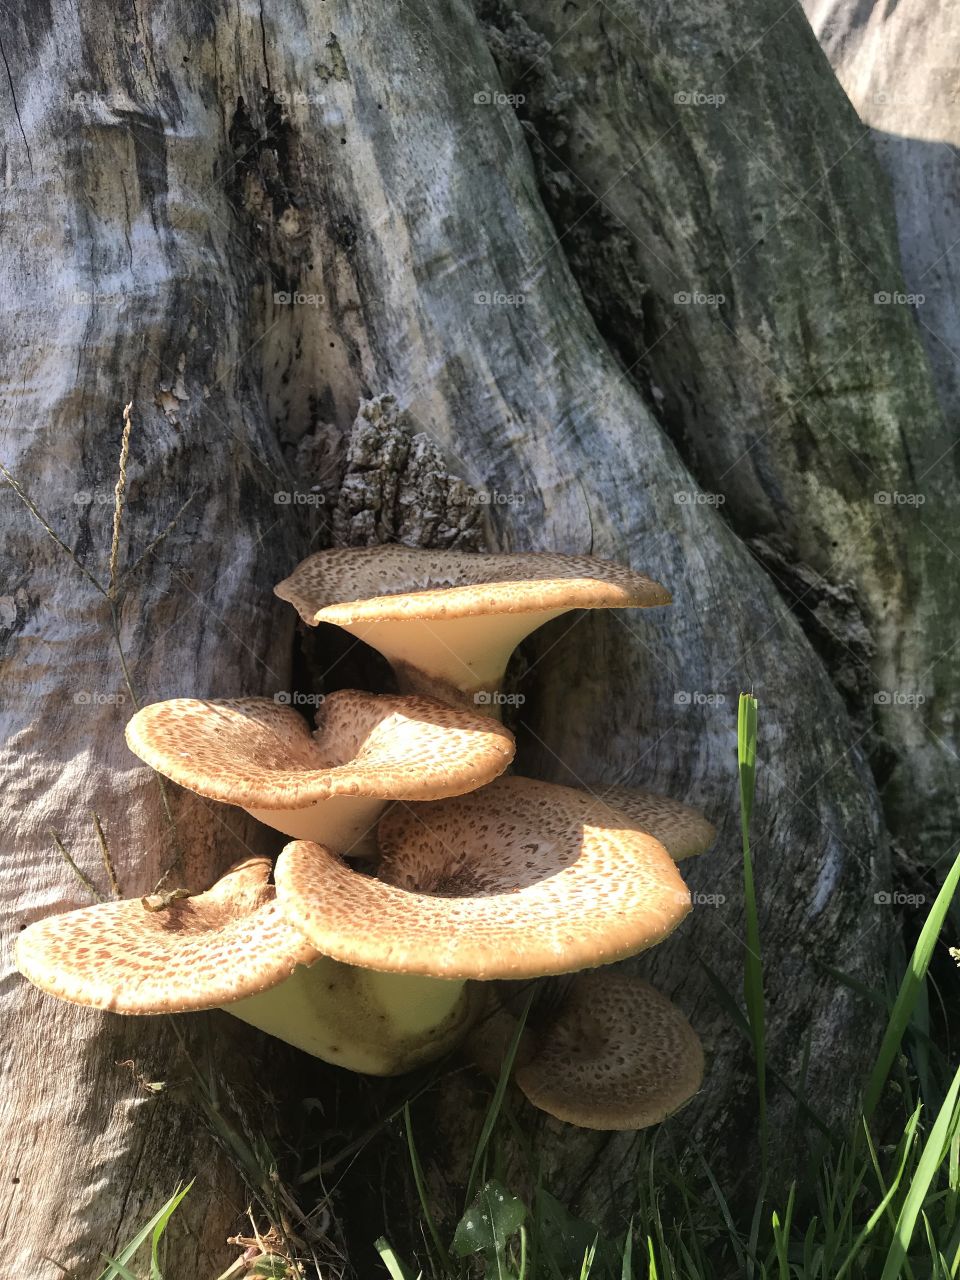 Tree fungus 